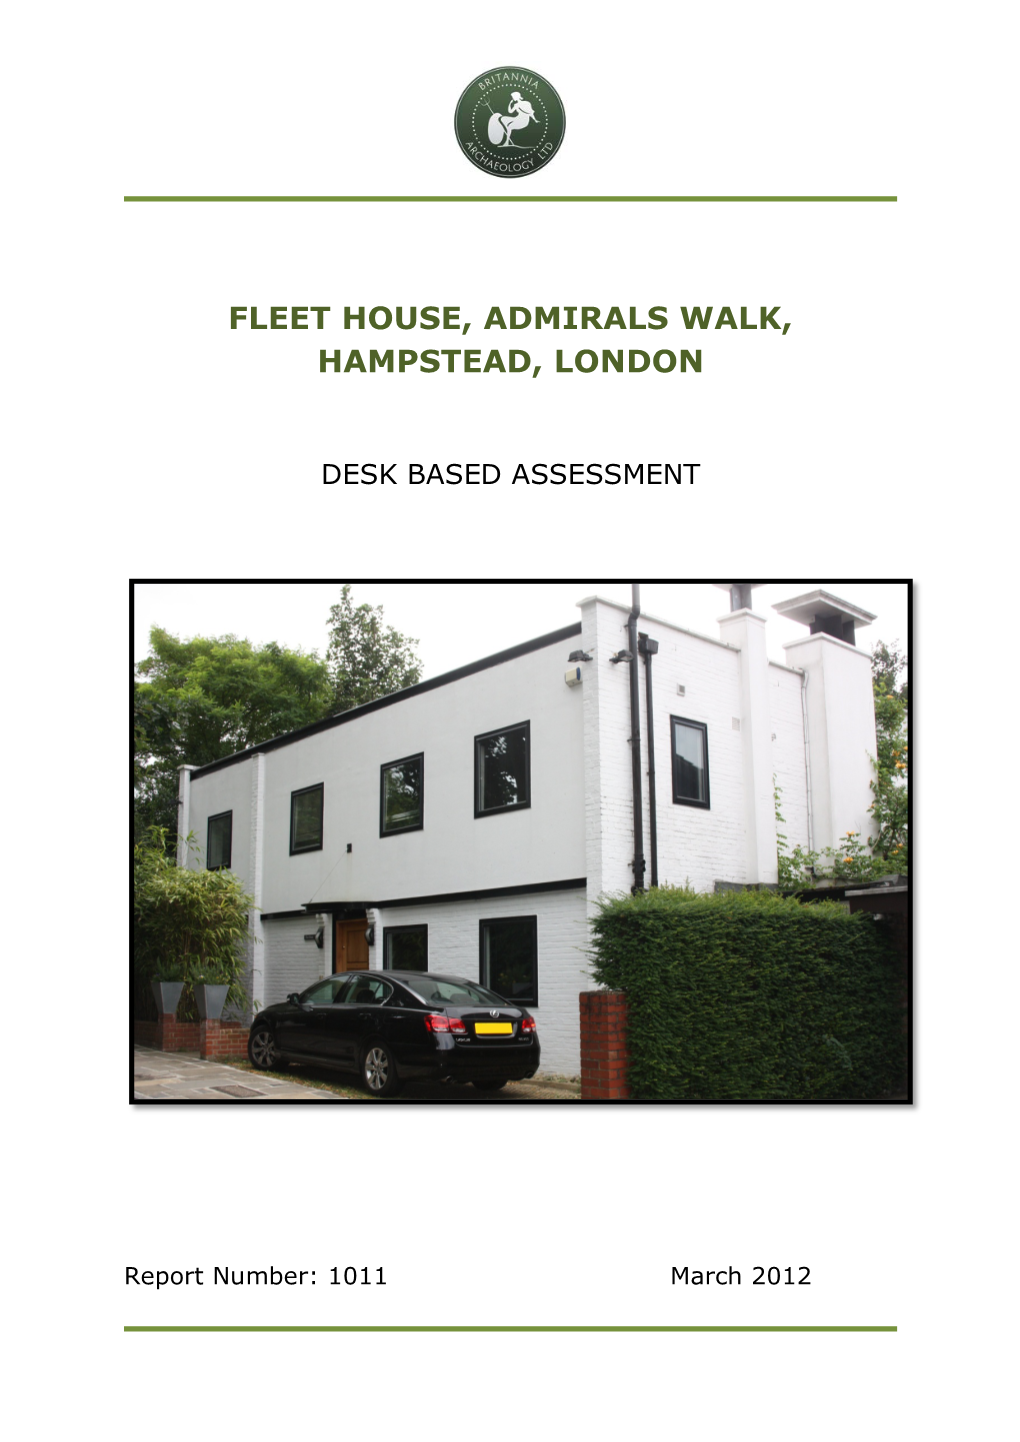 Fleet House, Admirals Walk, Hampstead, London